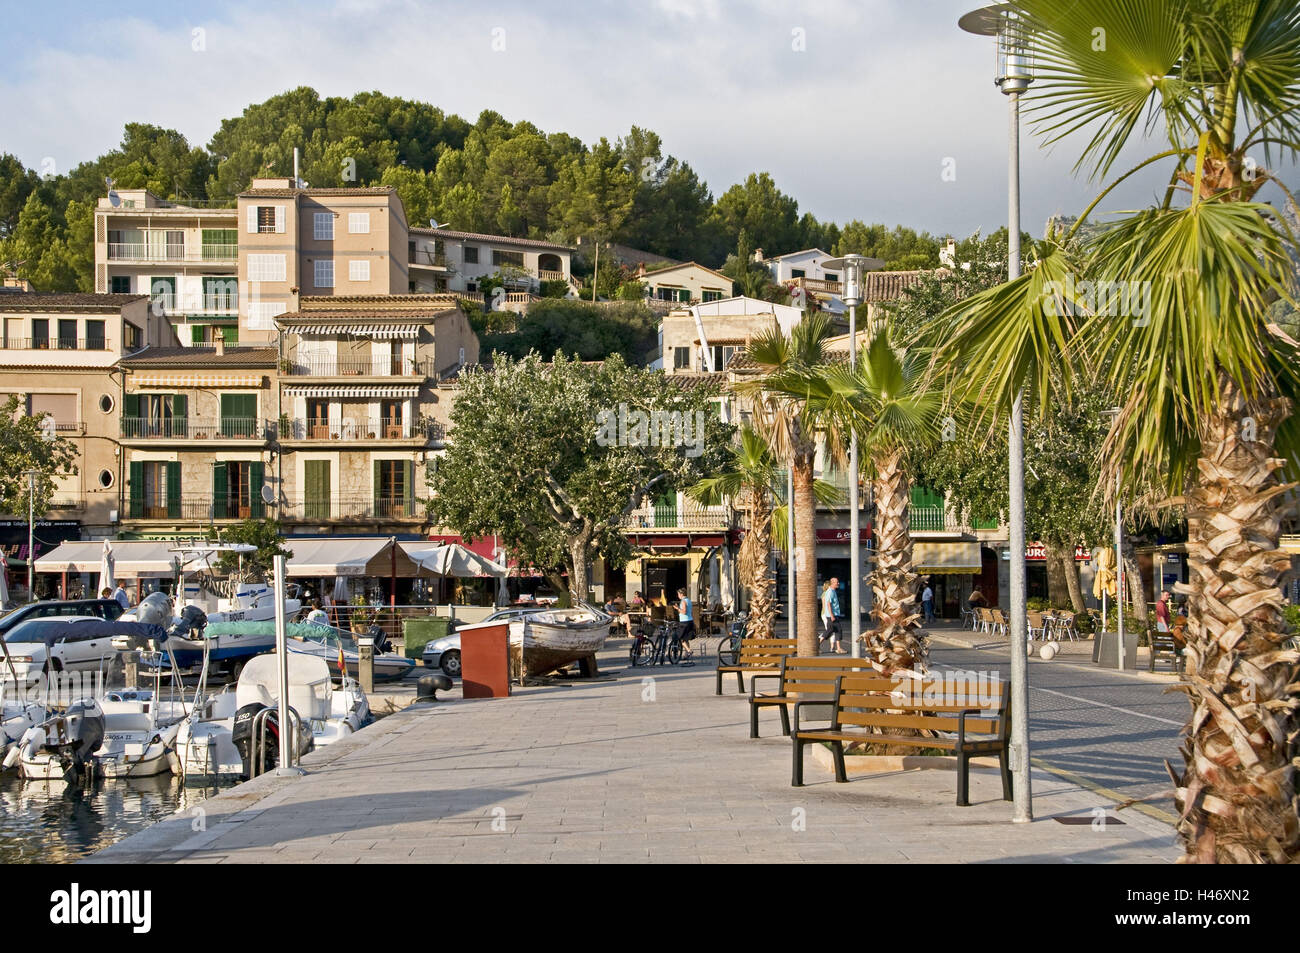 Port de soller promenade hi-res stock photography and images - Alamy